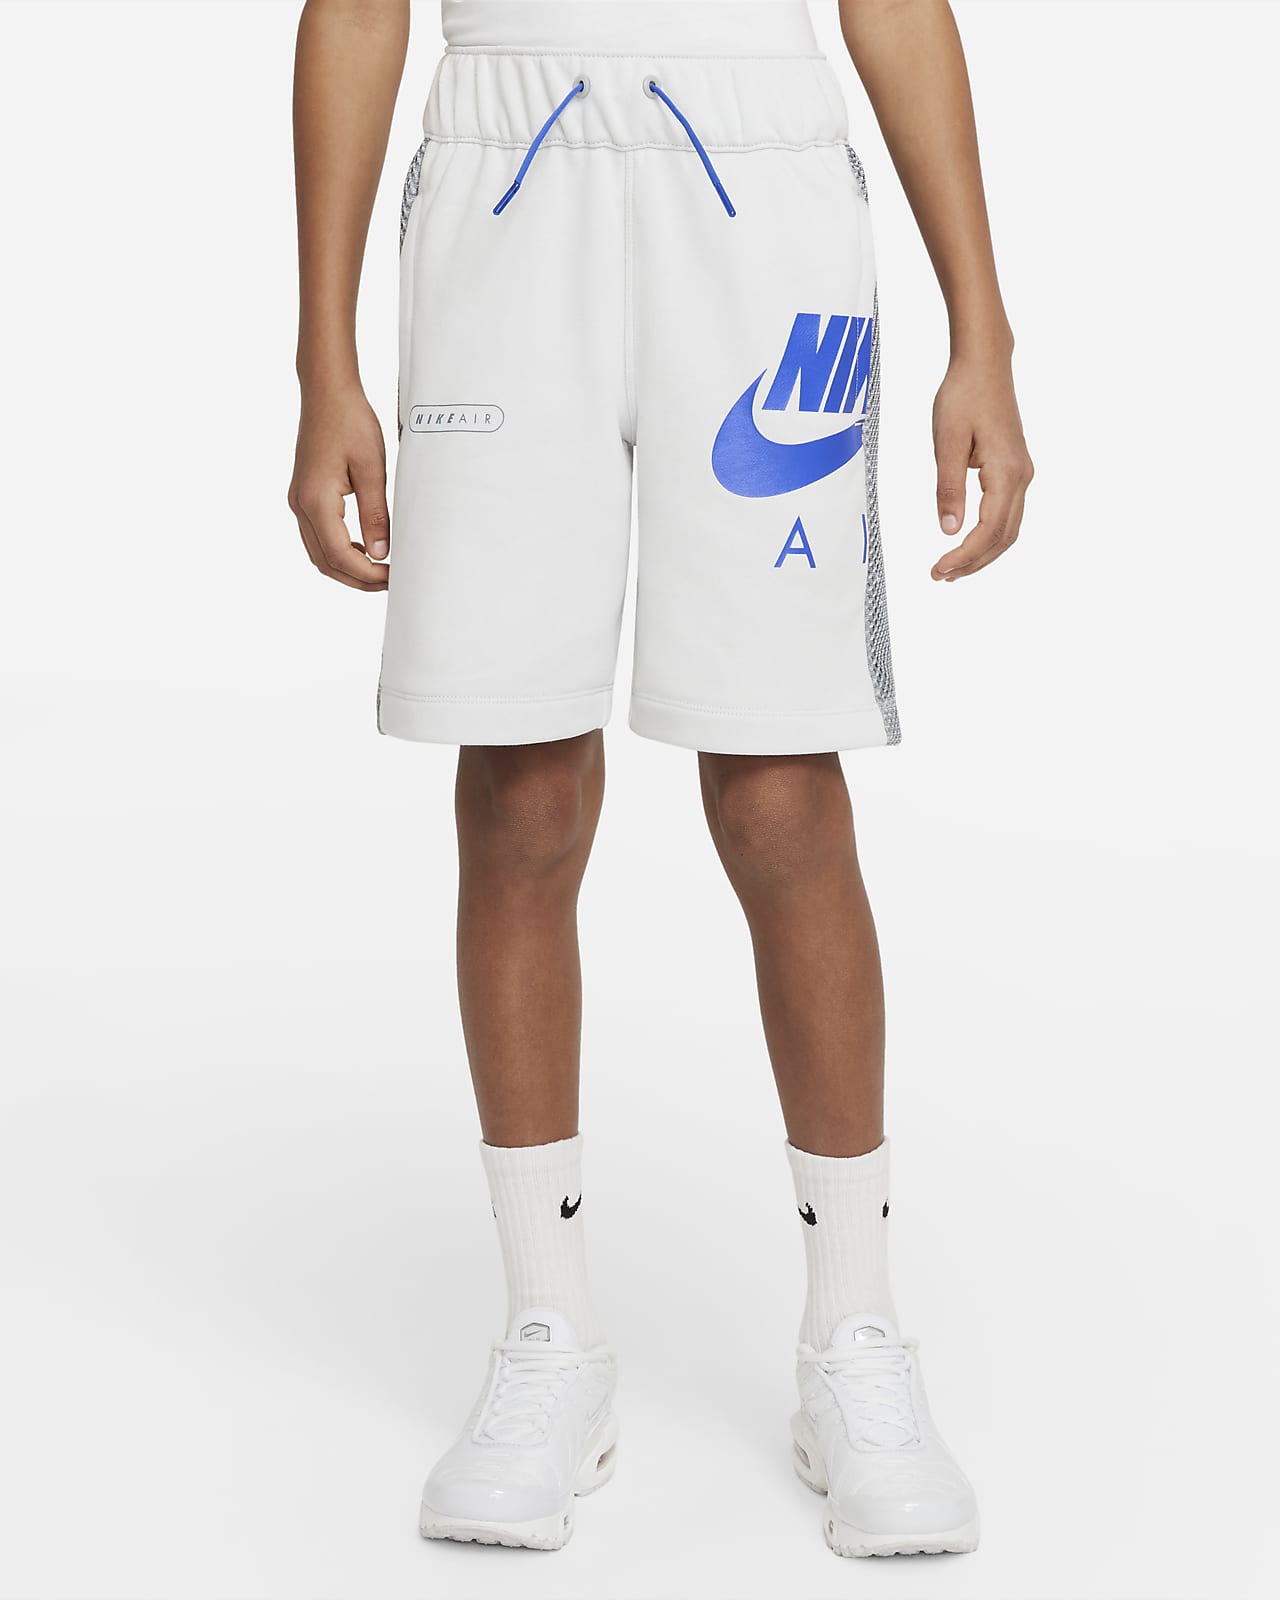 Nike Air Shorts aus French-Terry-Material für ältere Kinder (Jungen)